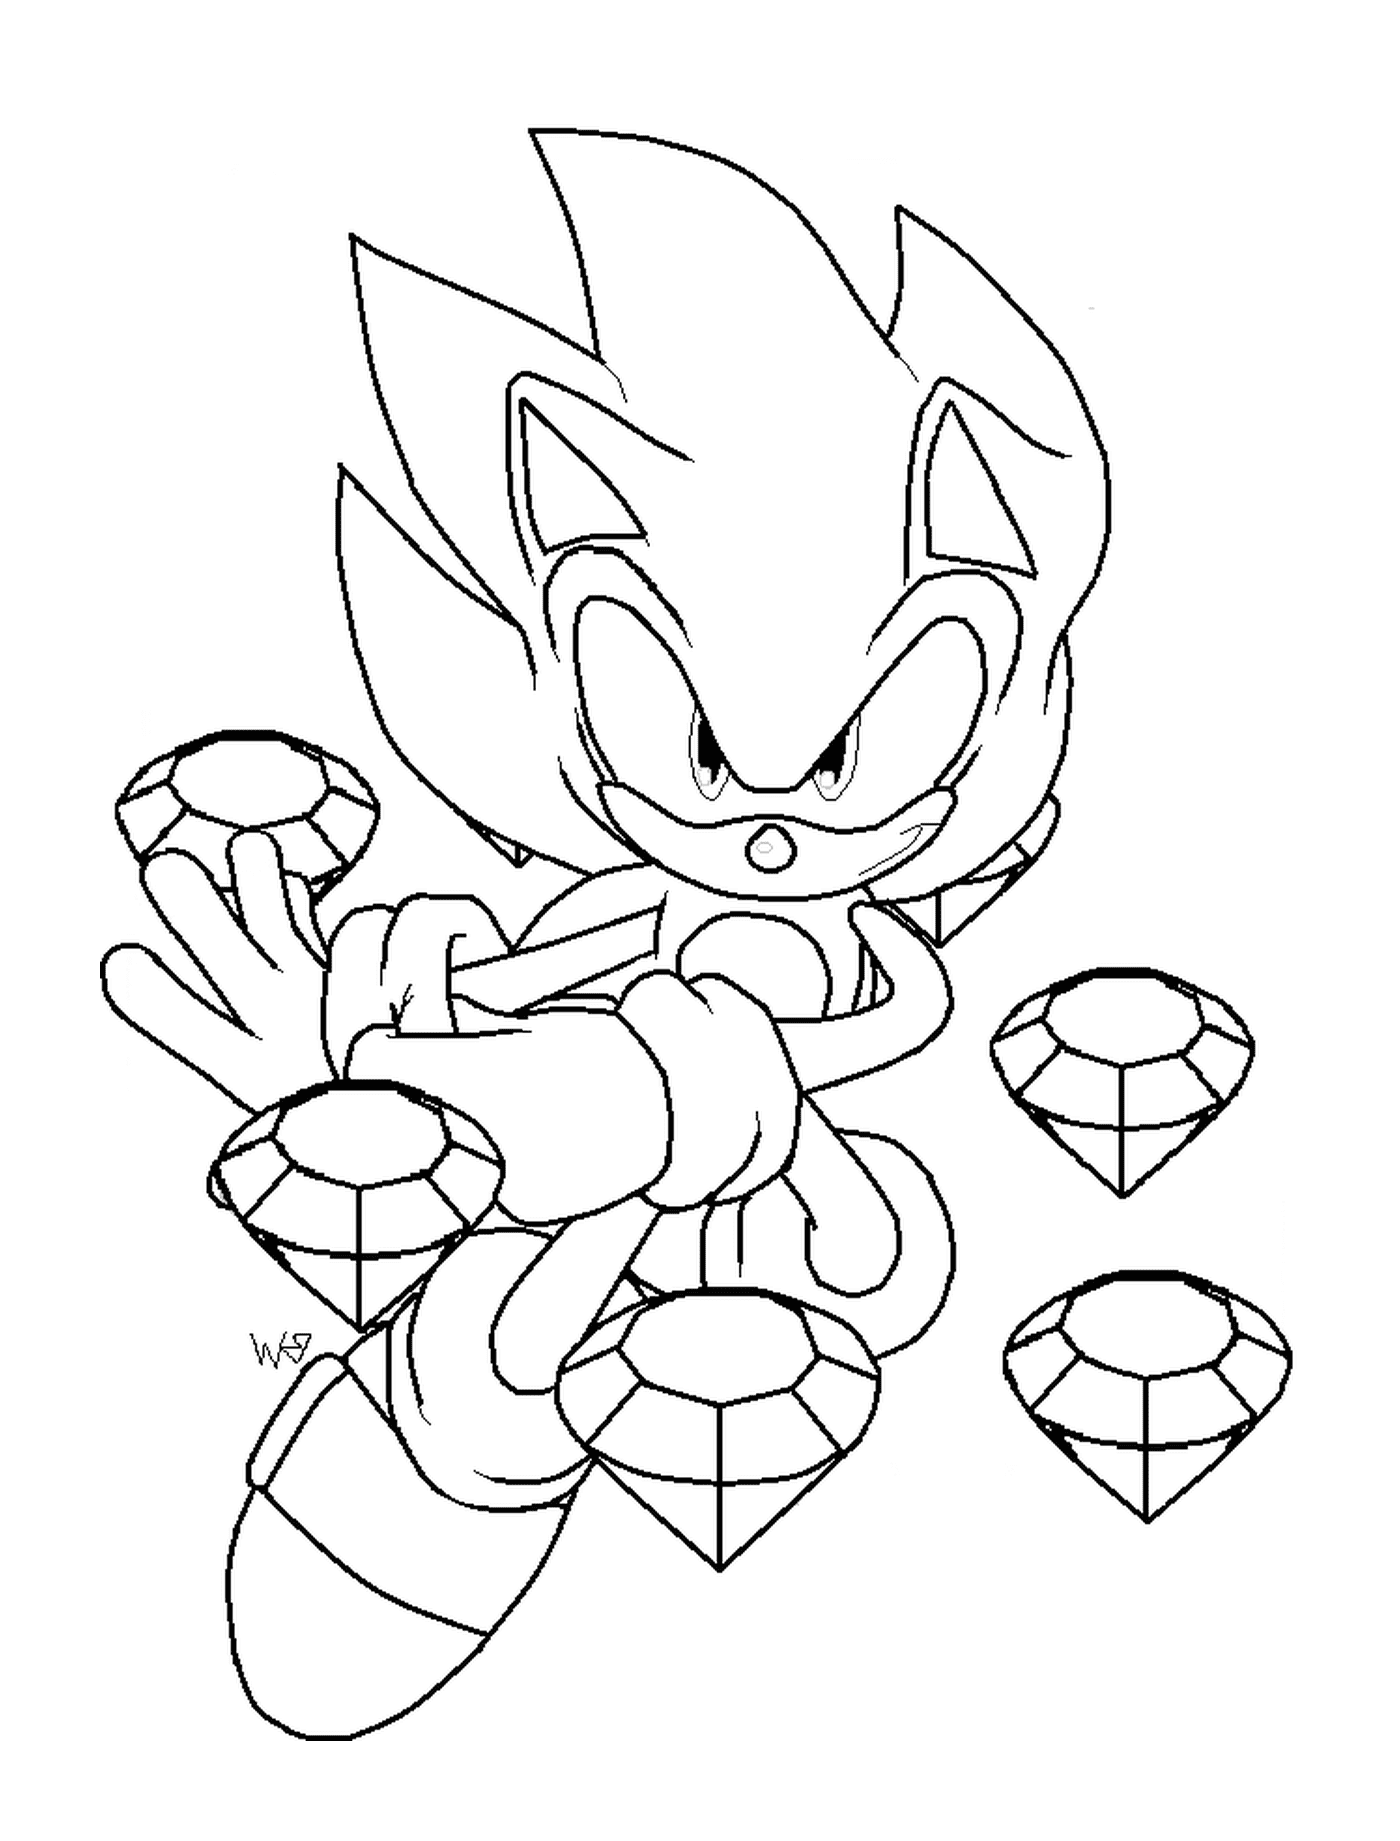  Super powerful Sonic 